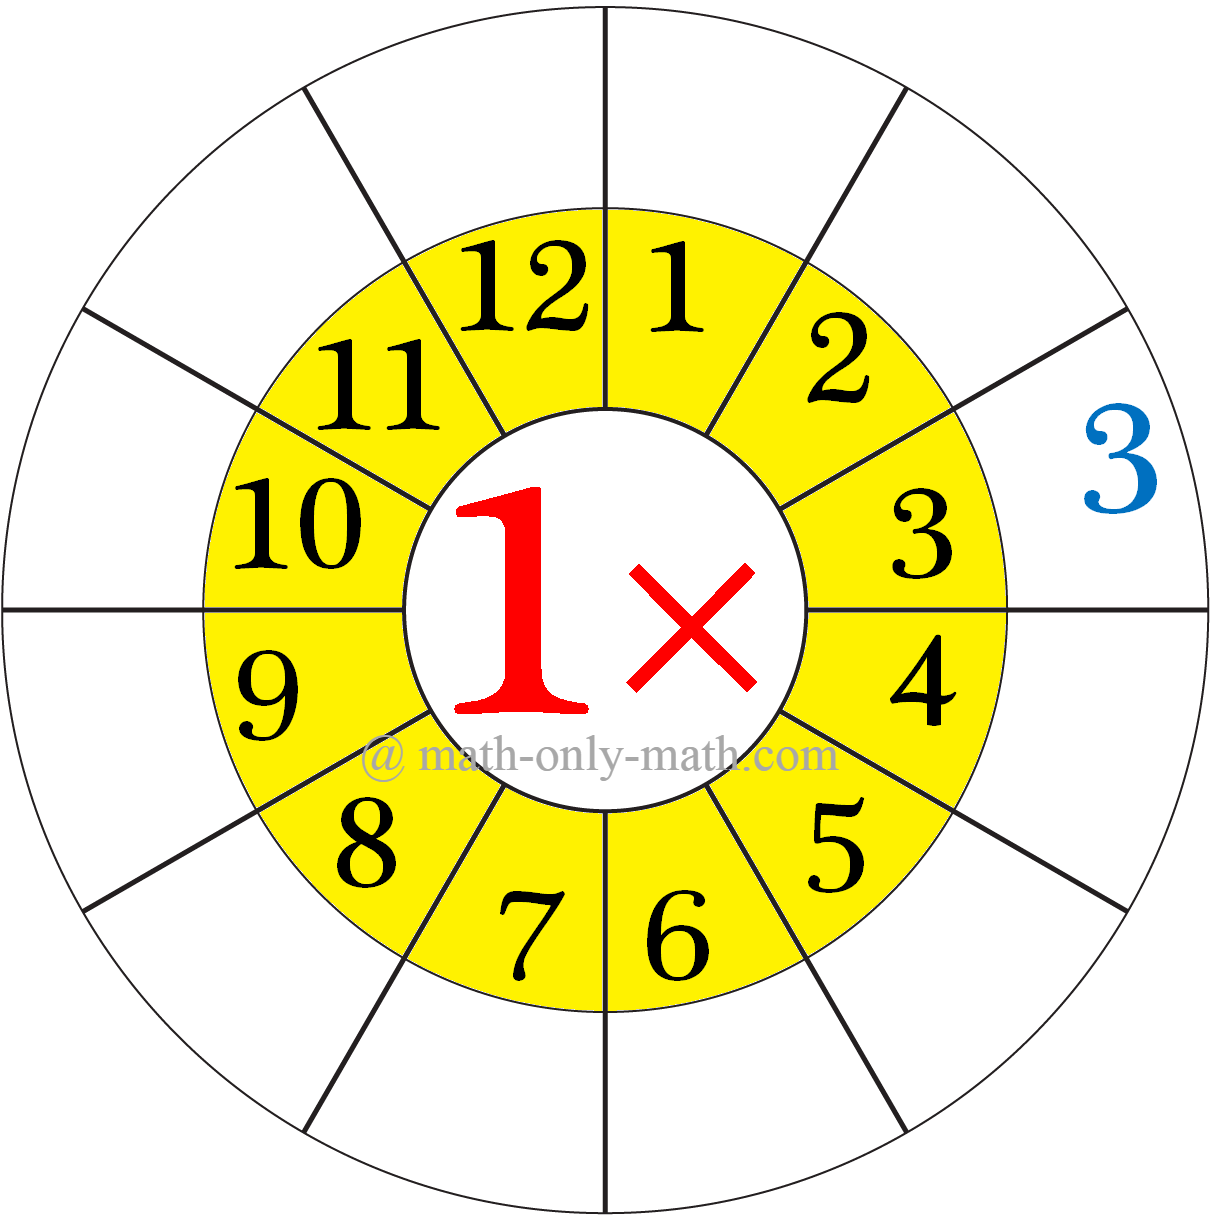 Worksheet on Multiplication Table of 1